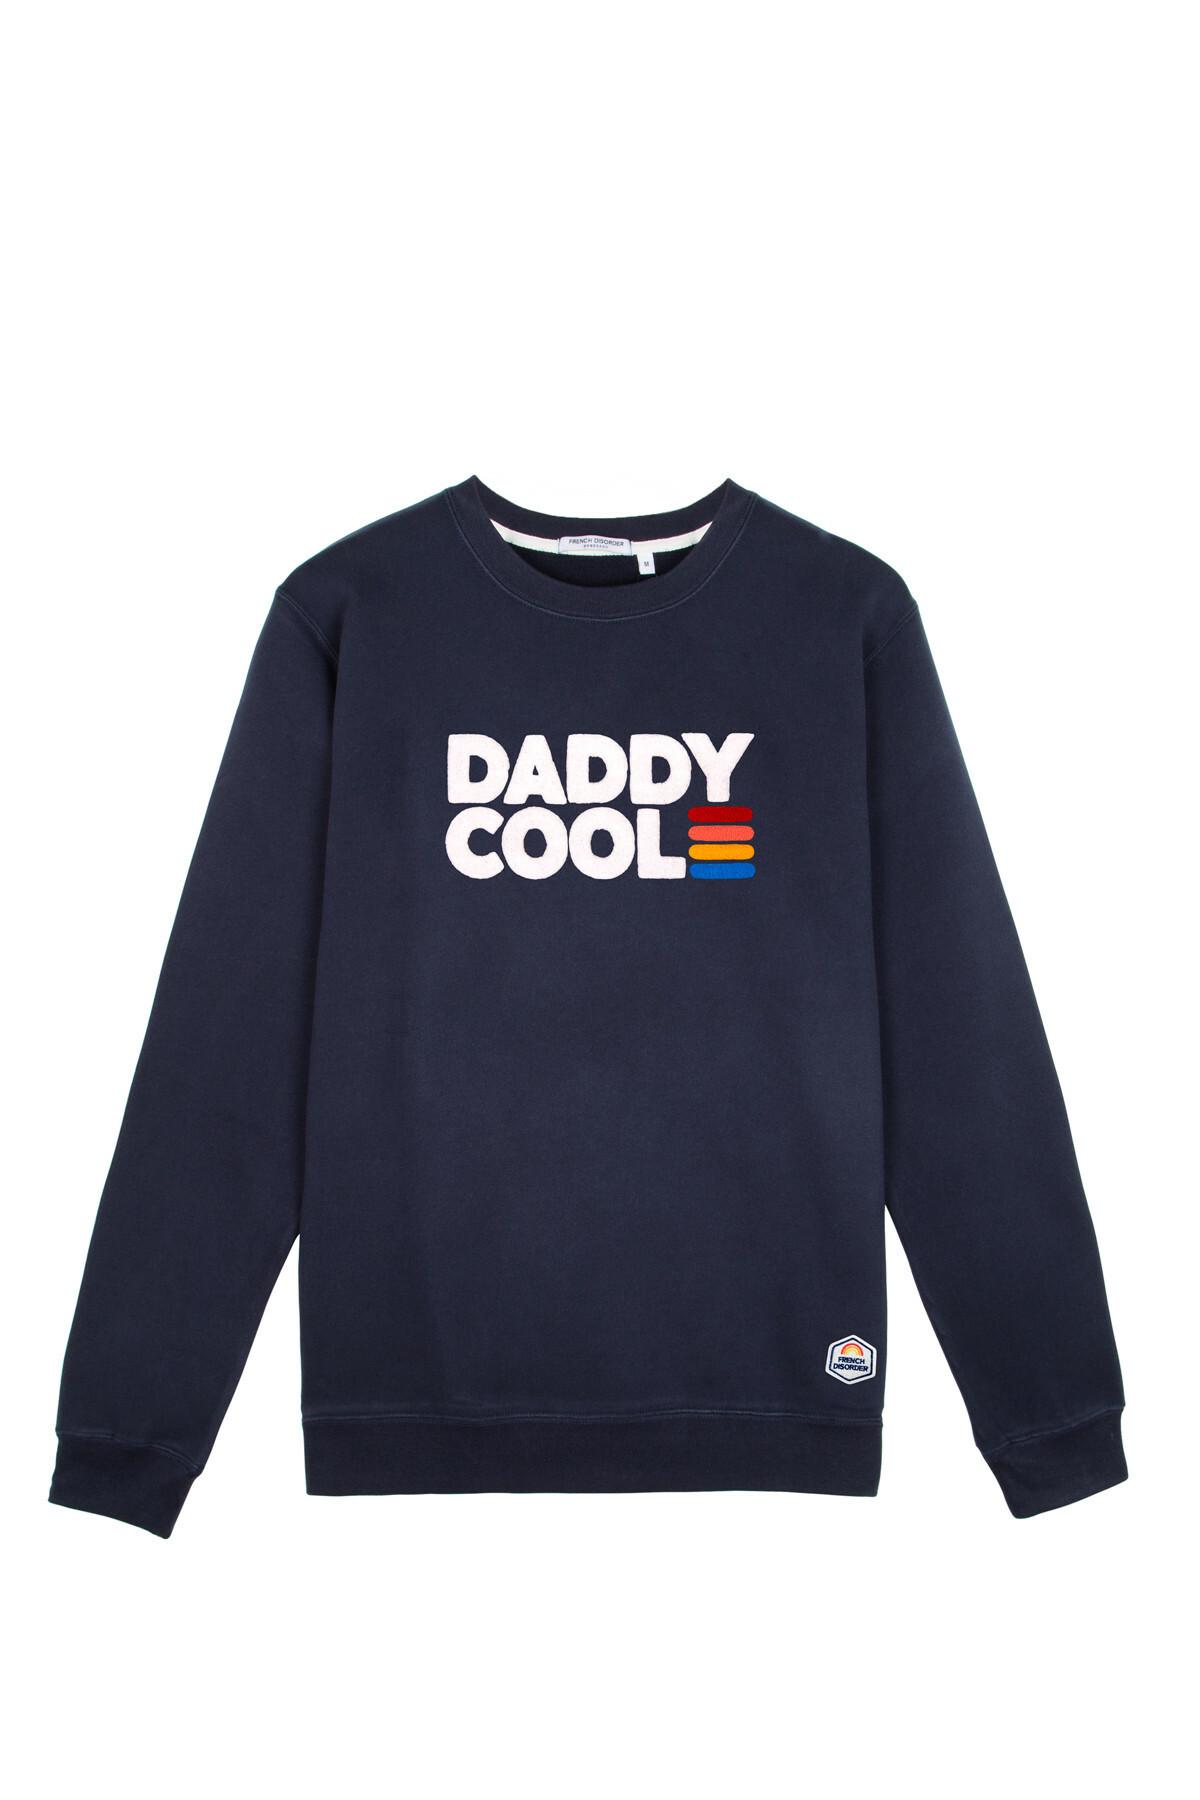 Sweatshirt French Disorder Daddy cool